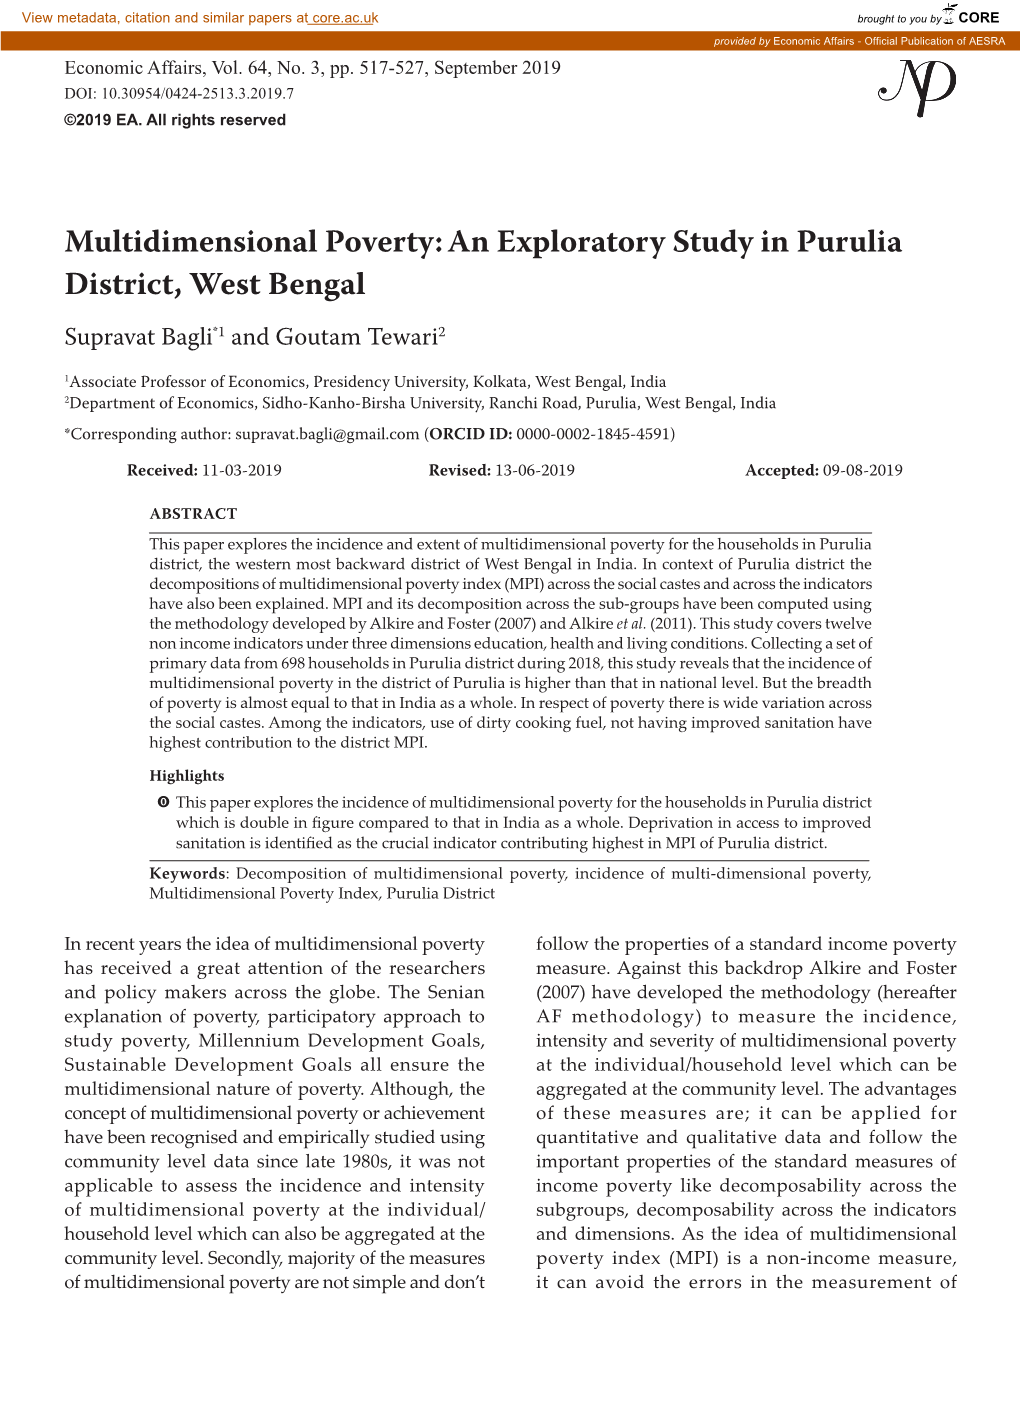 Multidimensional Poverty:An Exploratory Study in Purulia District